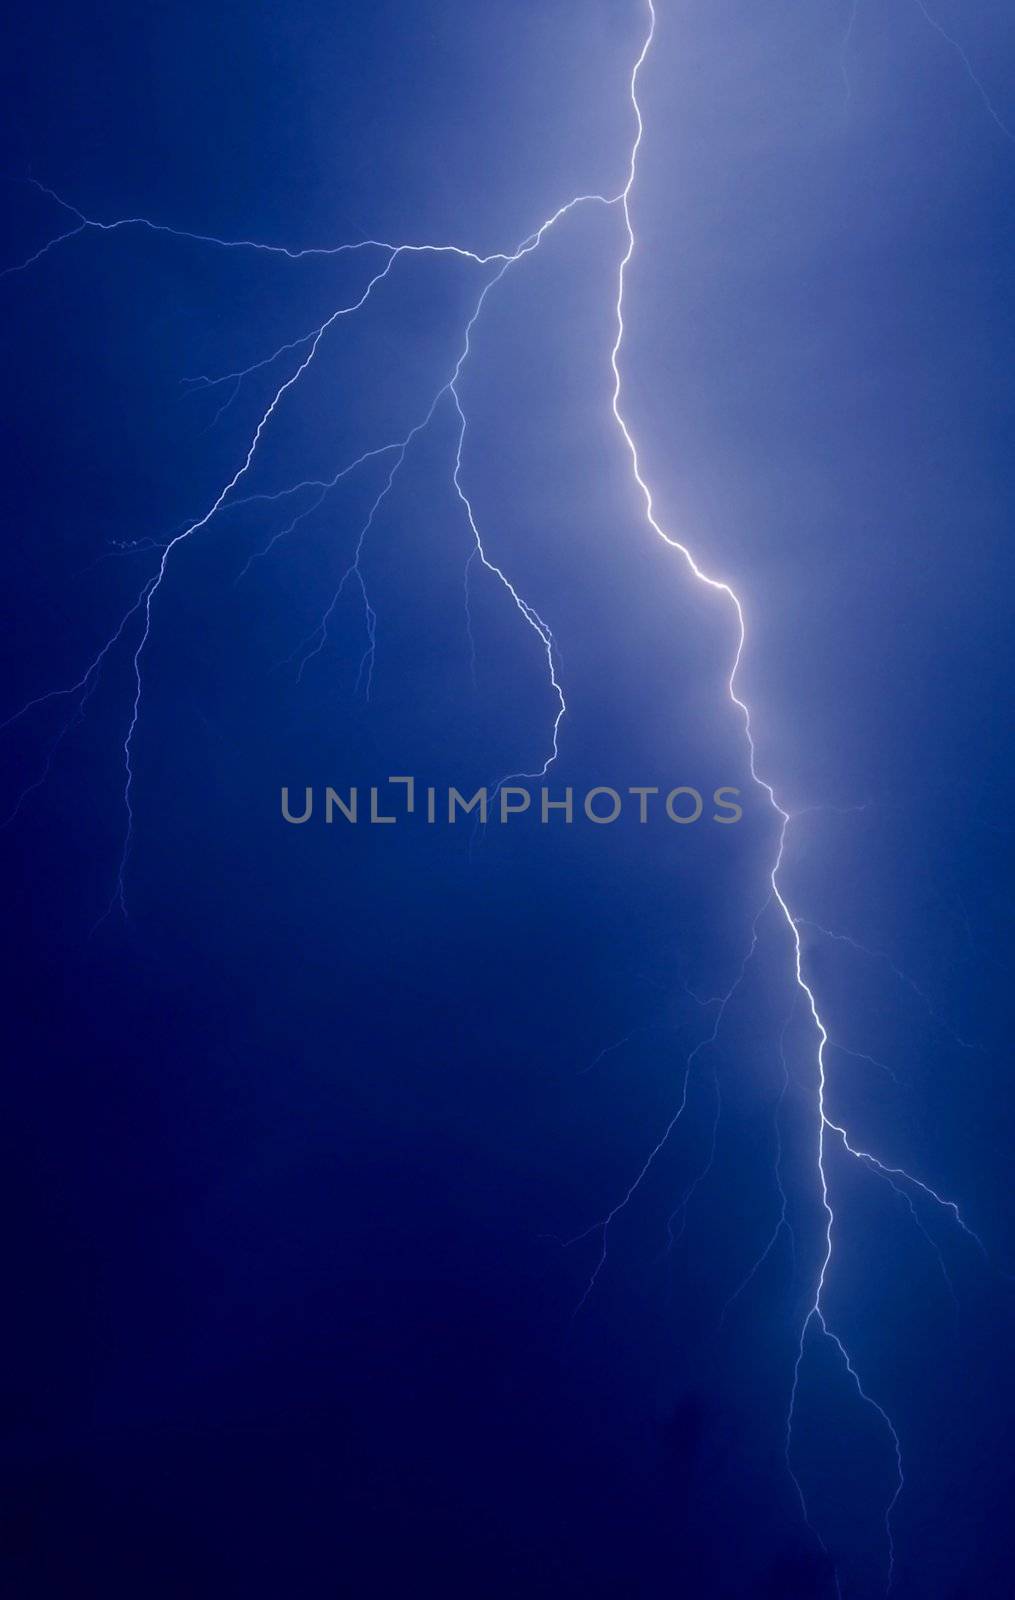 lightning strike in the darkness by ozaiachin